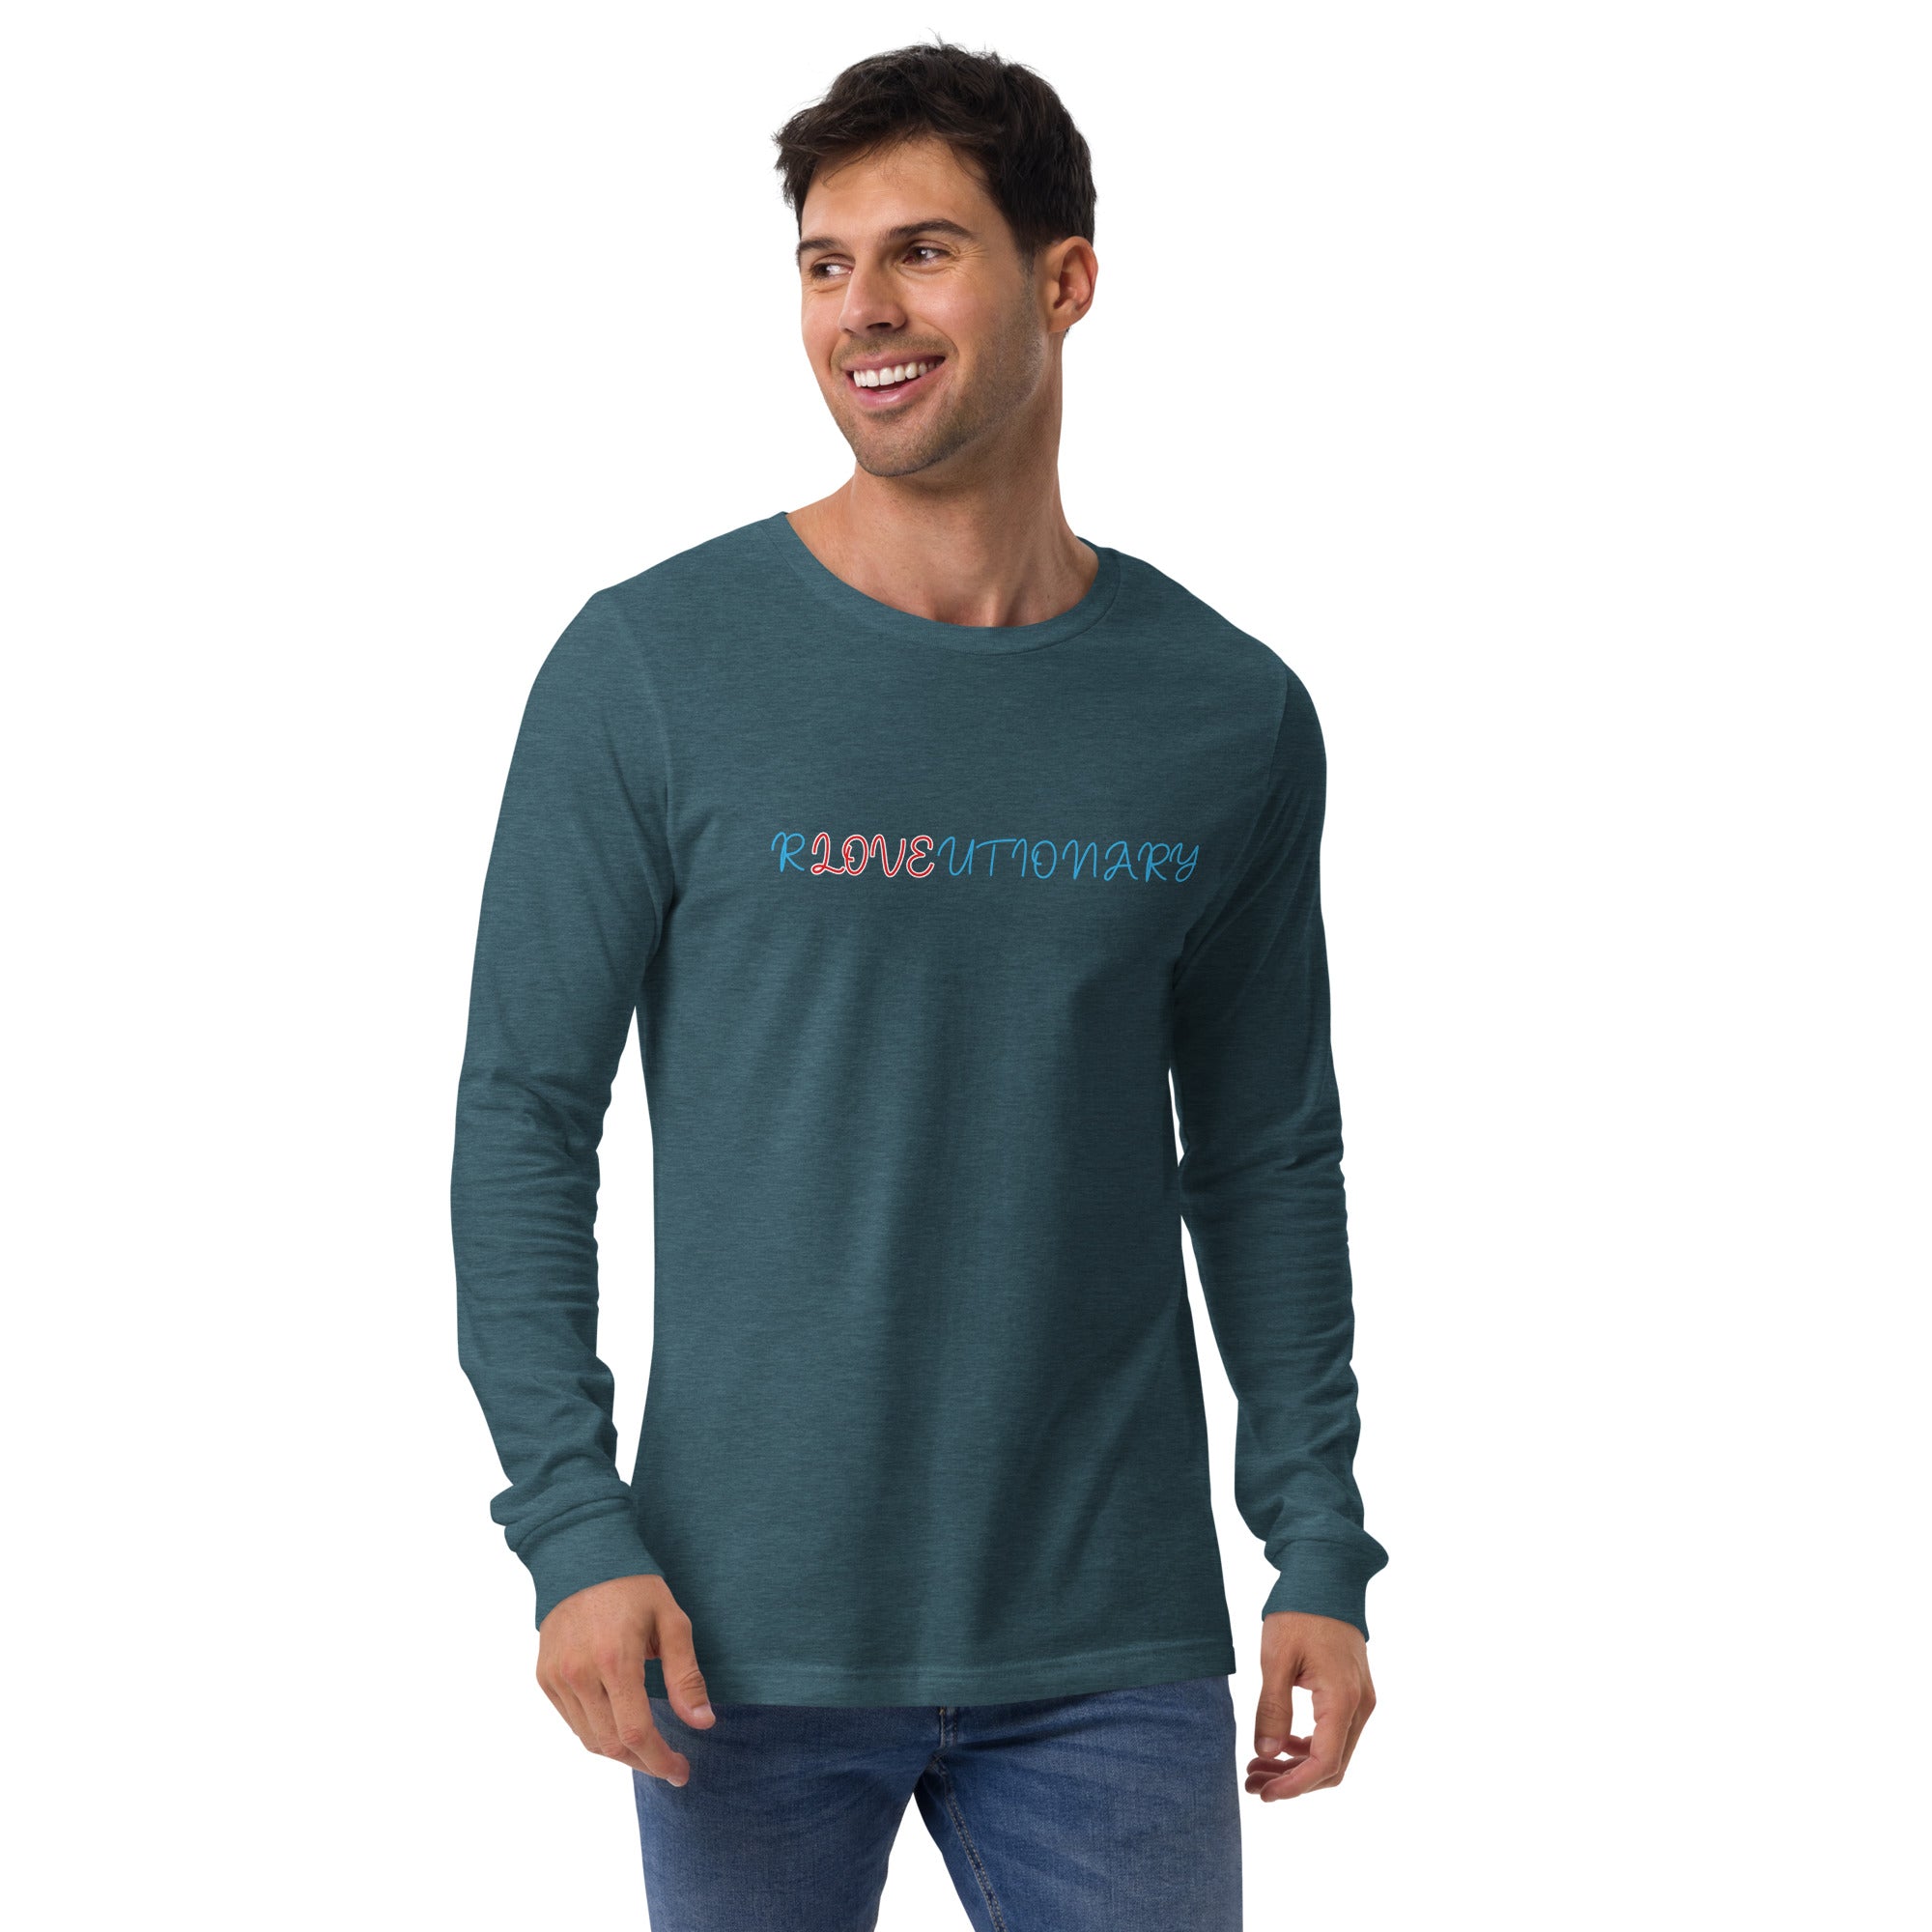 Revolutionary Unisex Long Sleeve Tee | Positive Affirmation T-Shirt